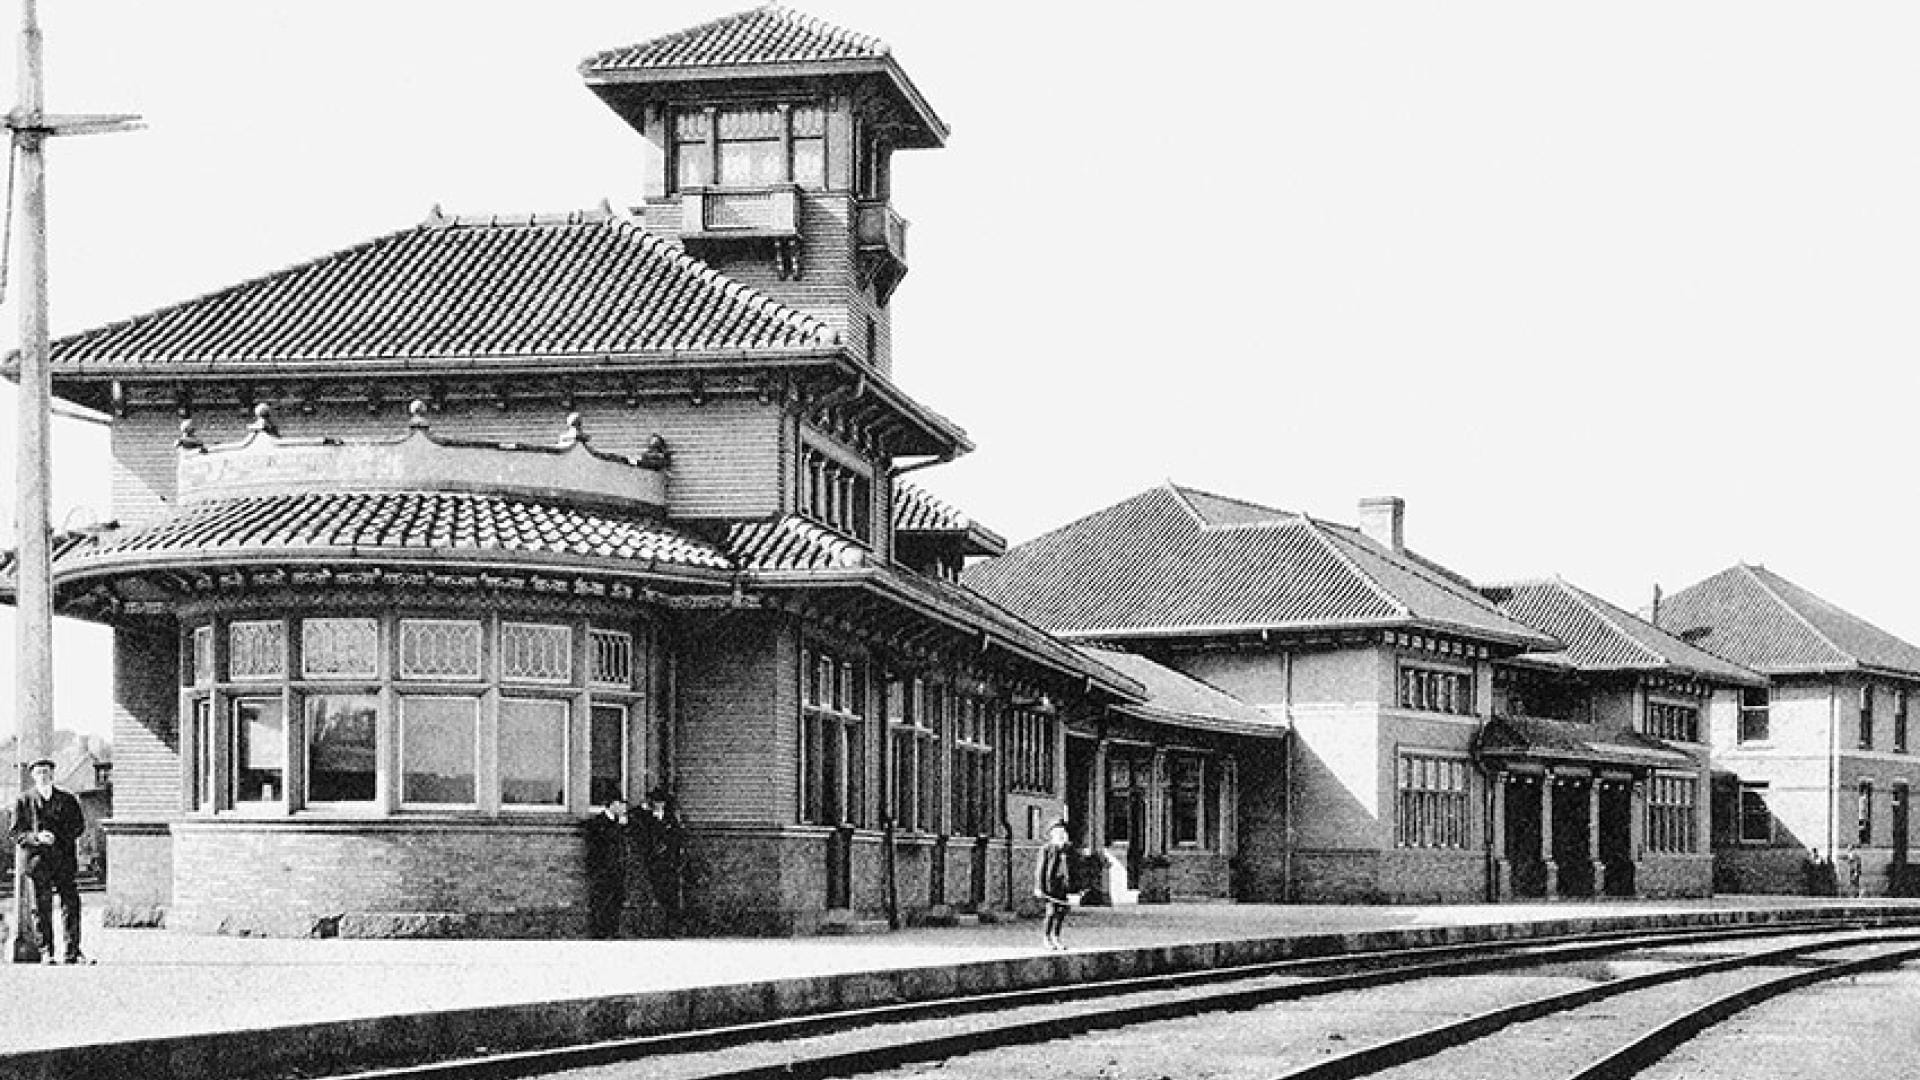 Old Allandale Train Station